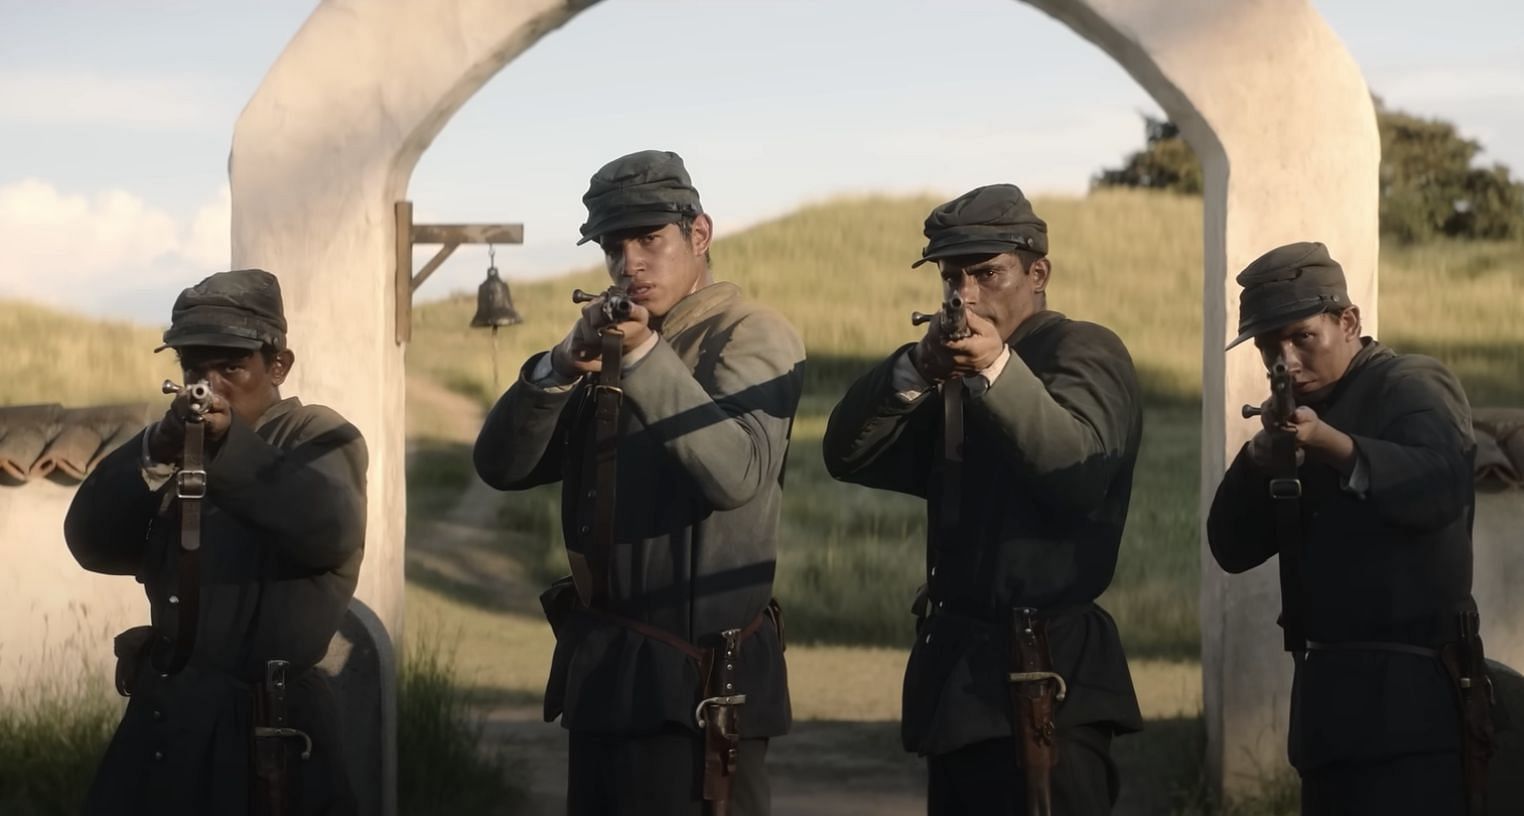 The firing squad (Image via Netflix)